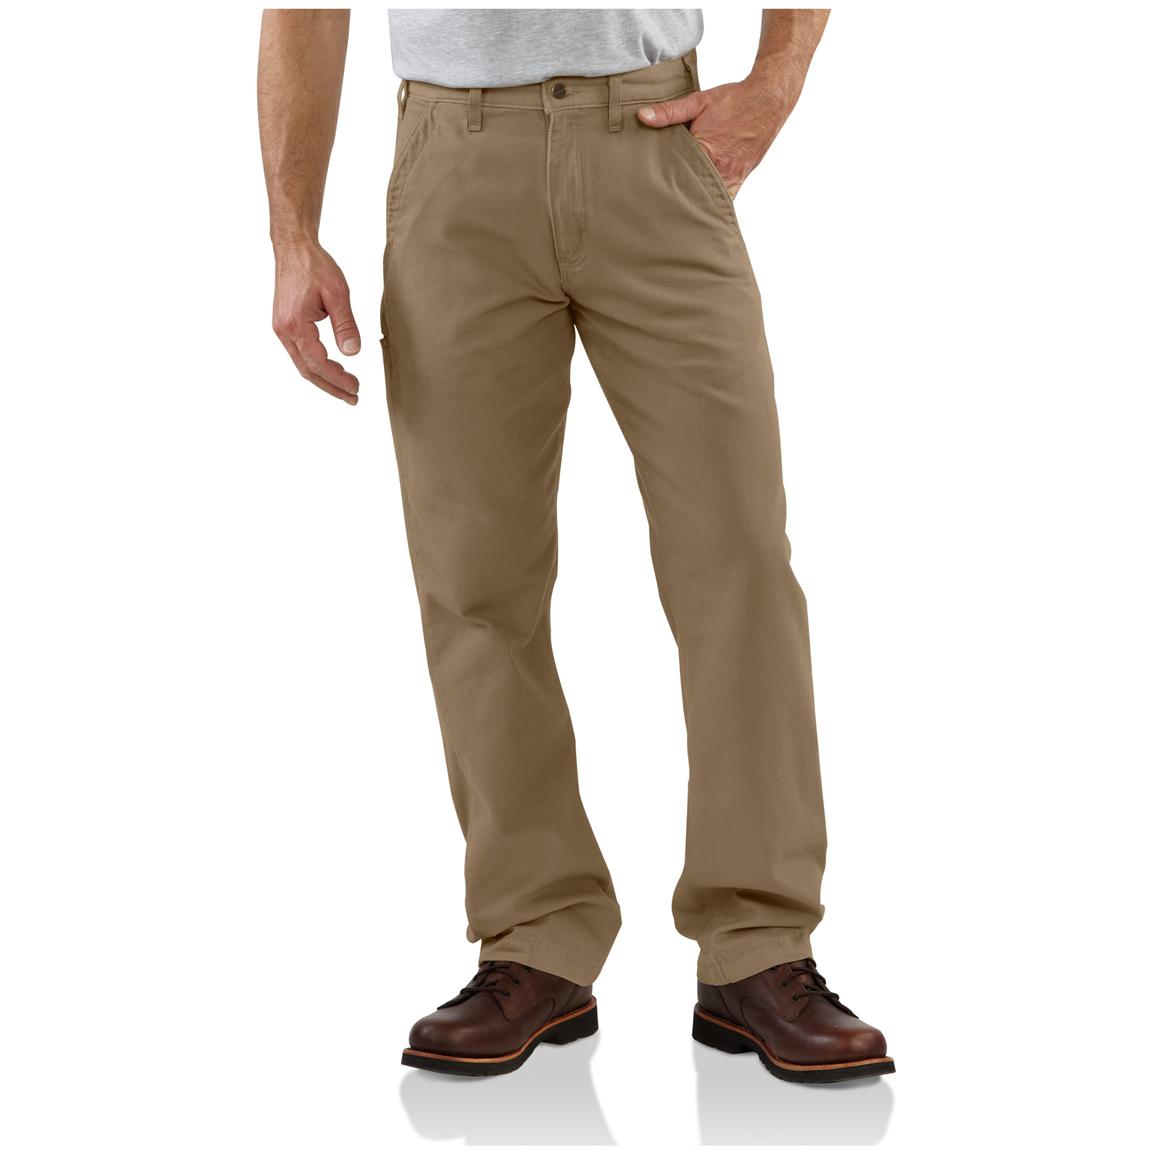 Men's Carhartt® Canvas Khakis - 226920, Jeans & Pants at Sportsman's Guide